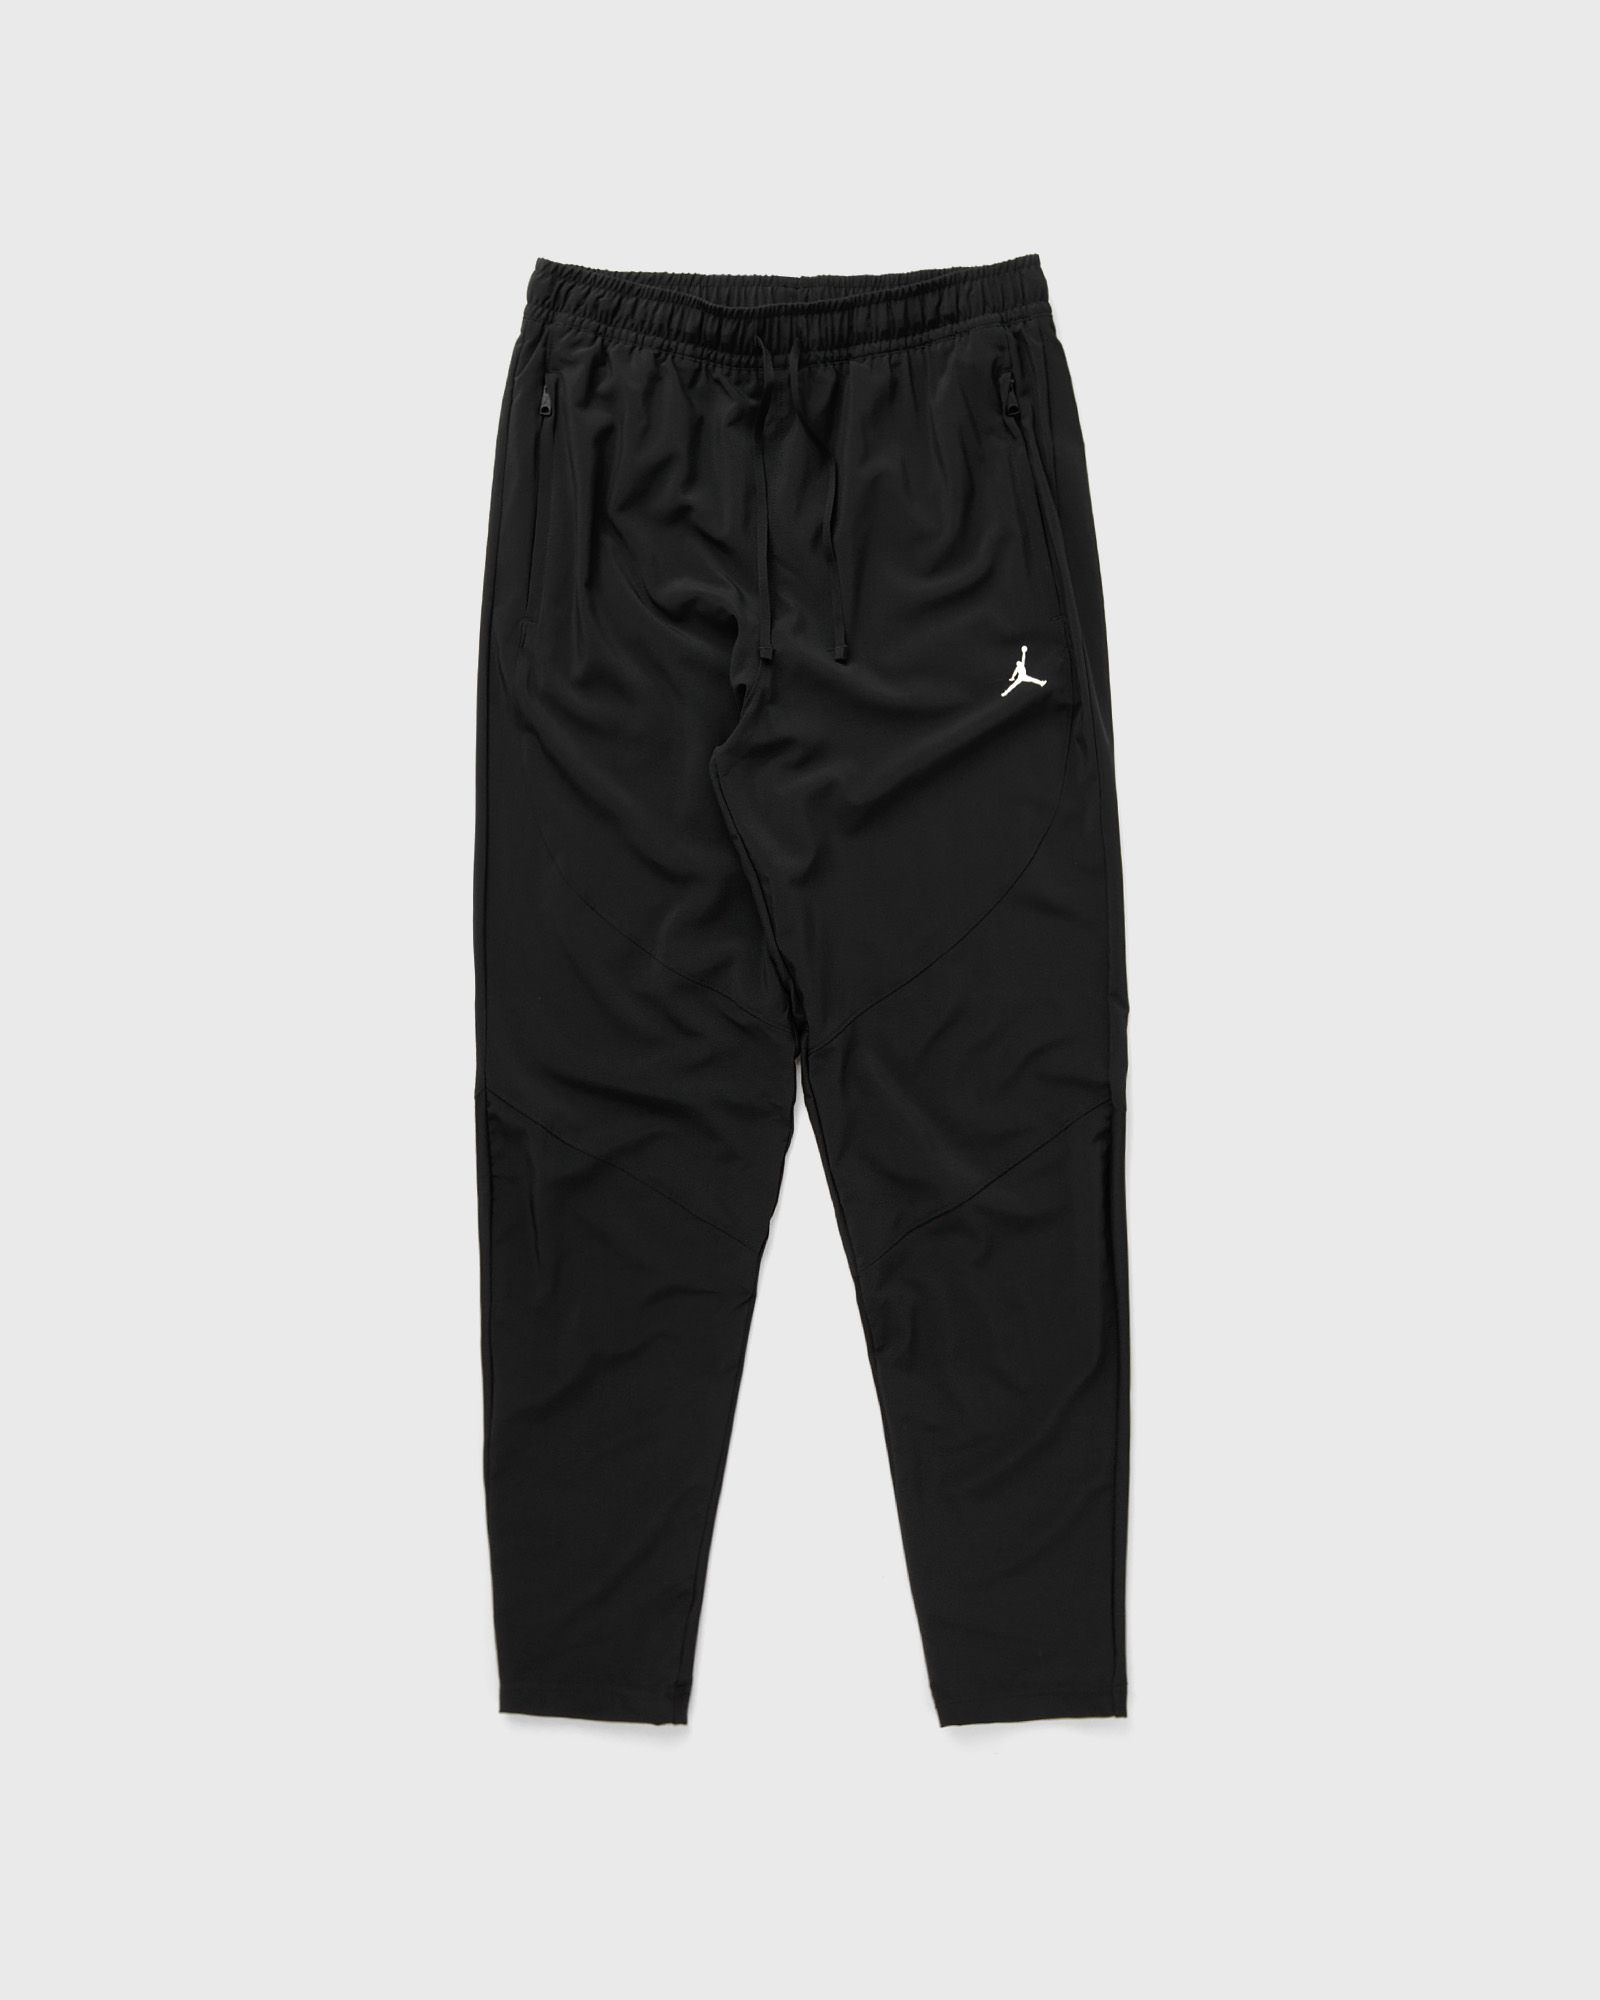 Jordan Sport Dri-FIT Woven Pants men Sweatpants black in Größe:XL von Jordan